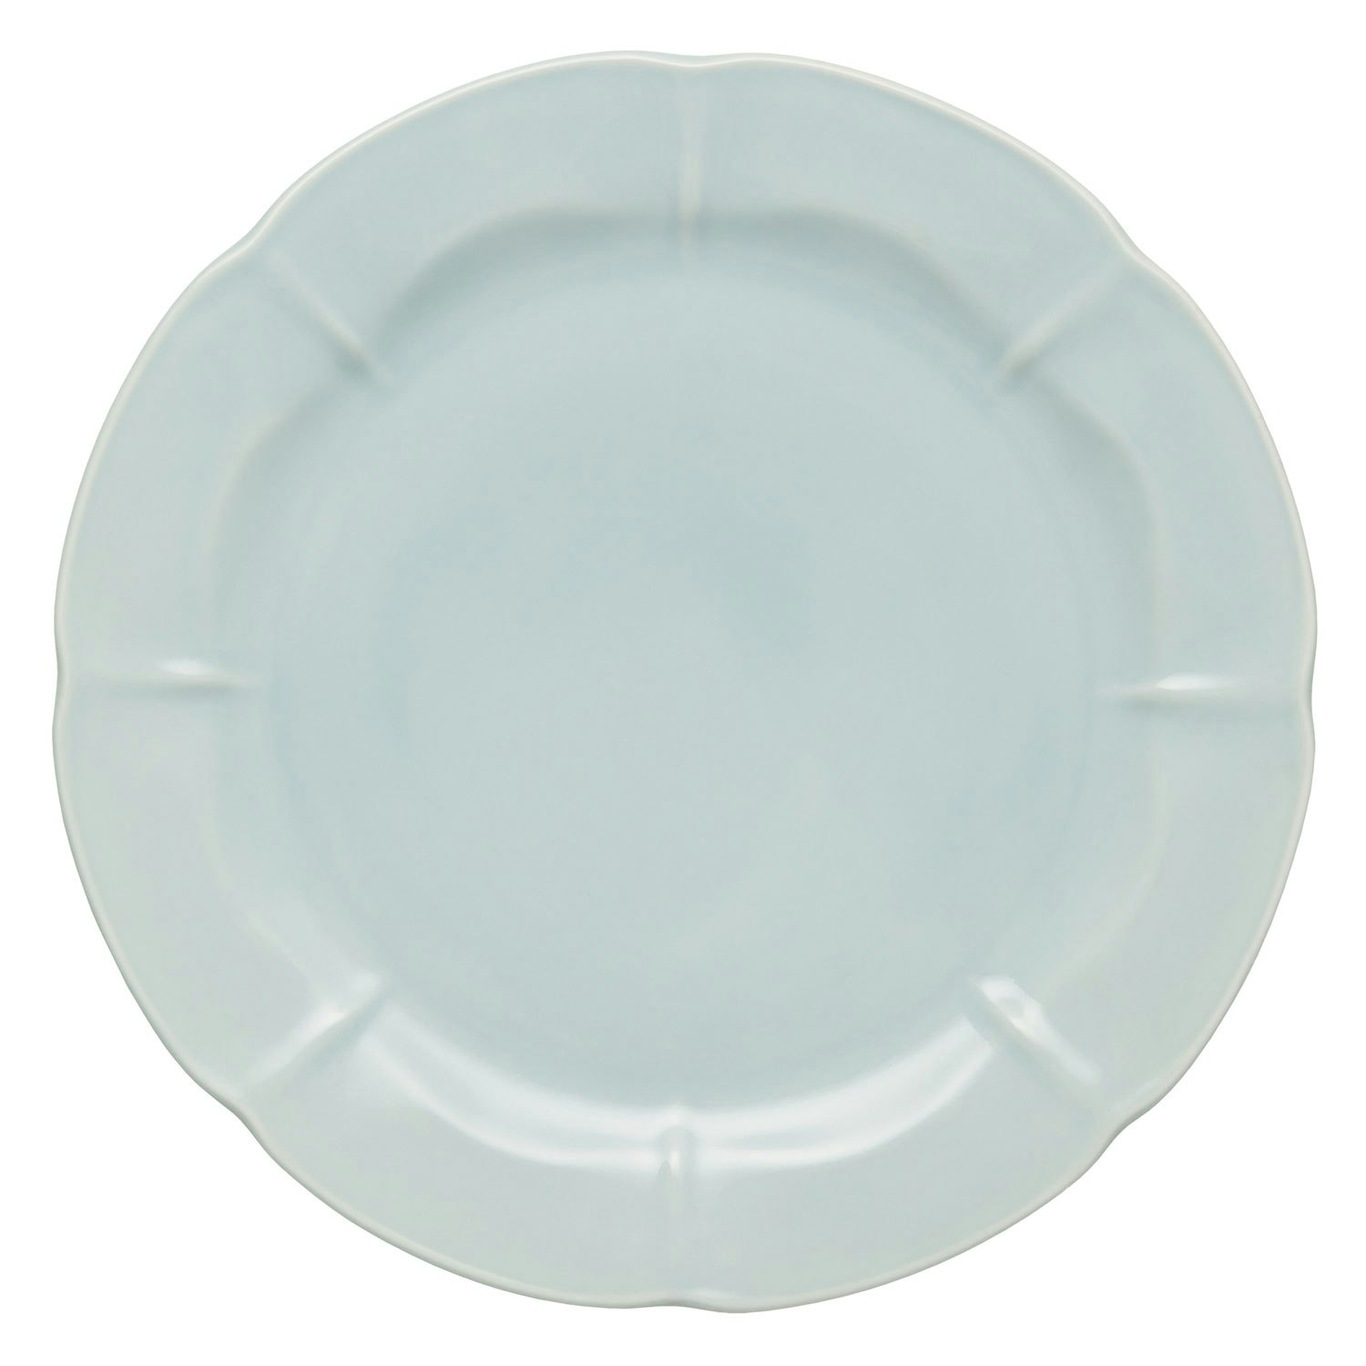 Søholm Solvej Lunch Plate 26,5 cm, Powder Blue